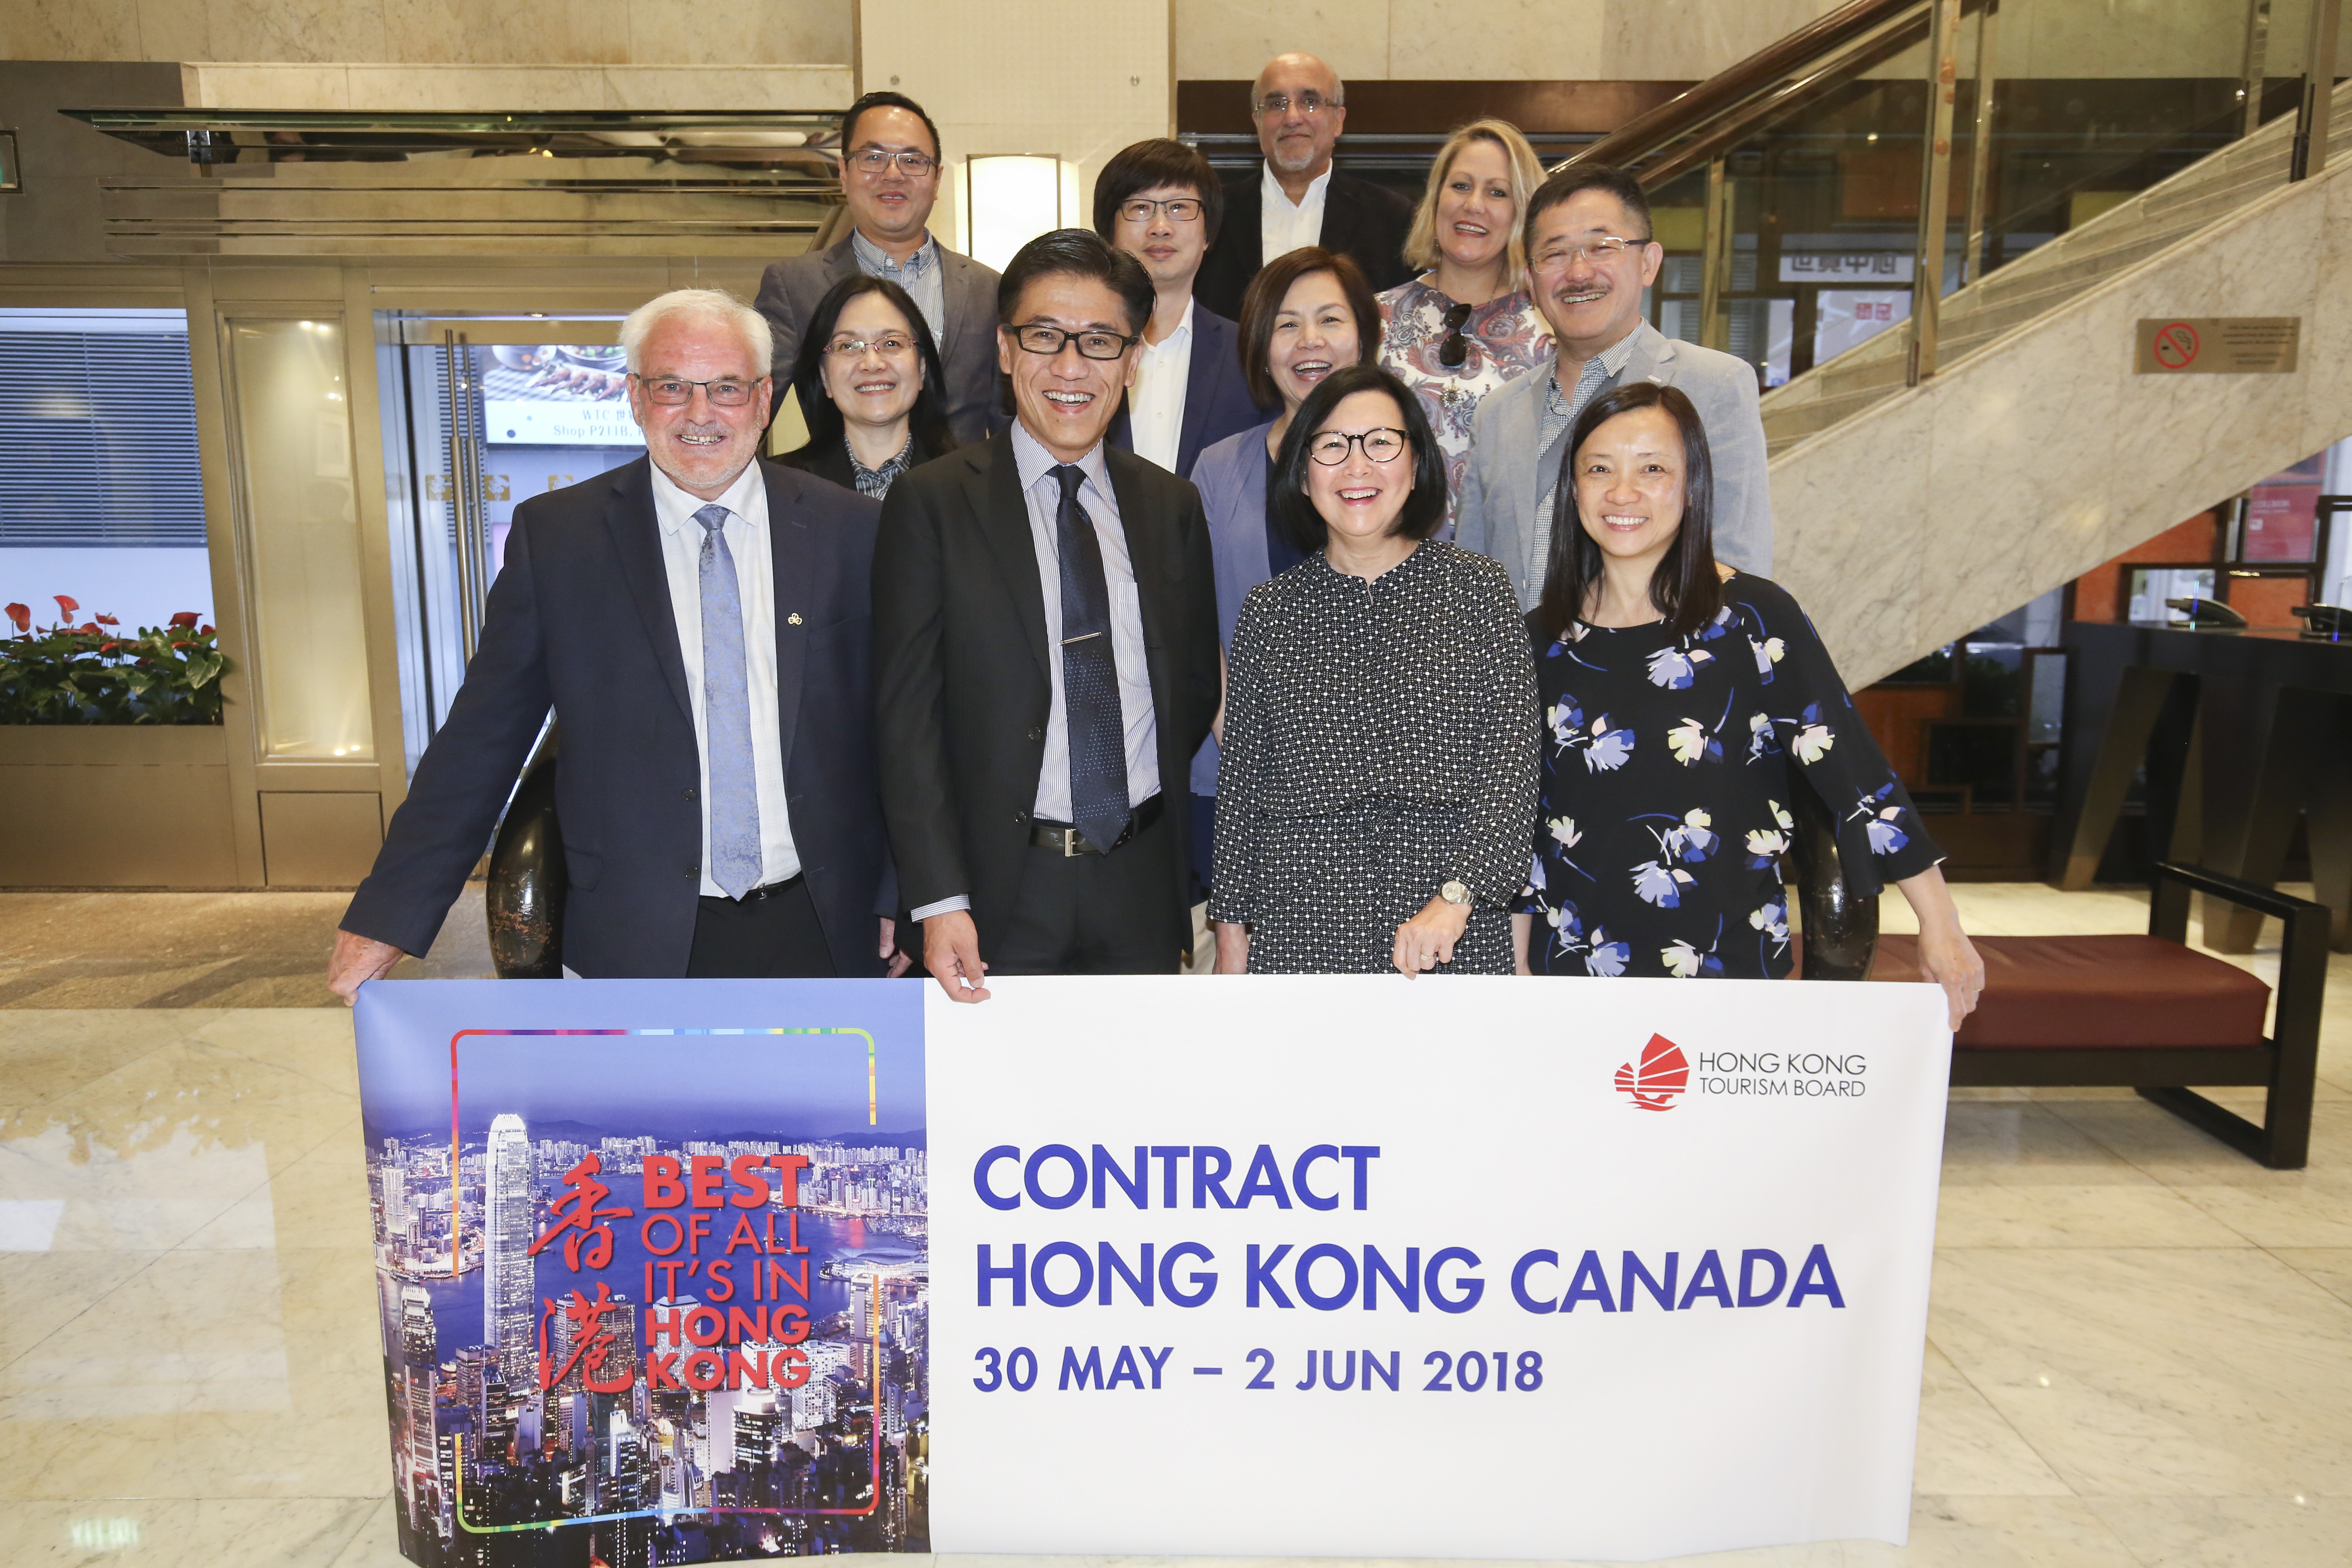 Contract HK Canada